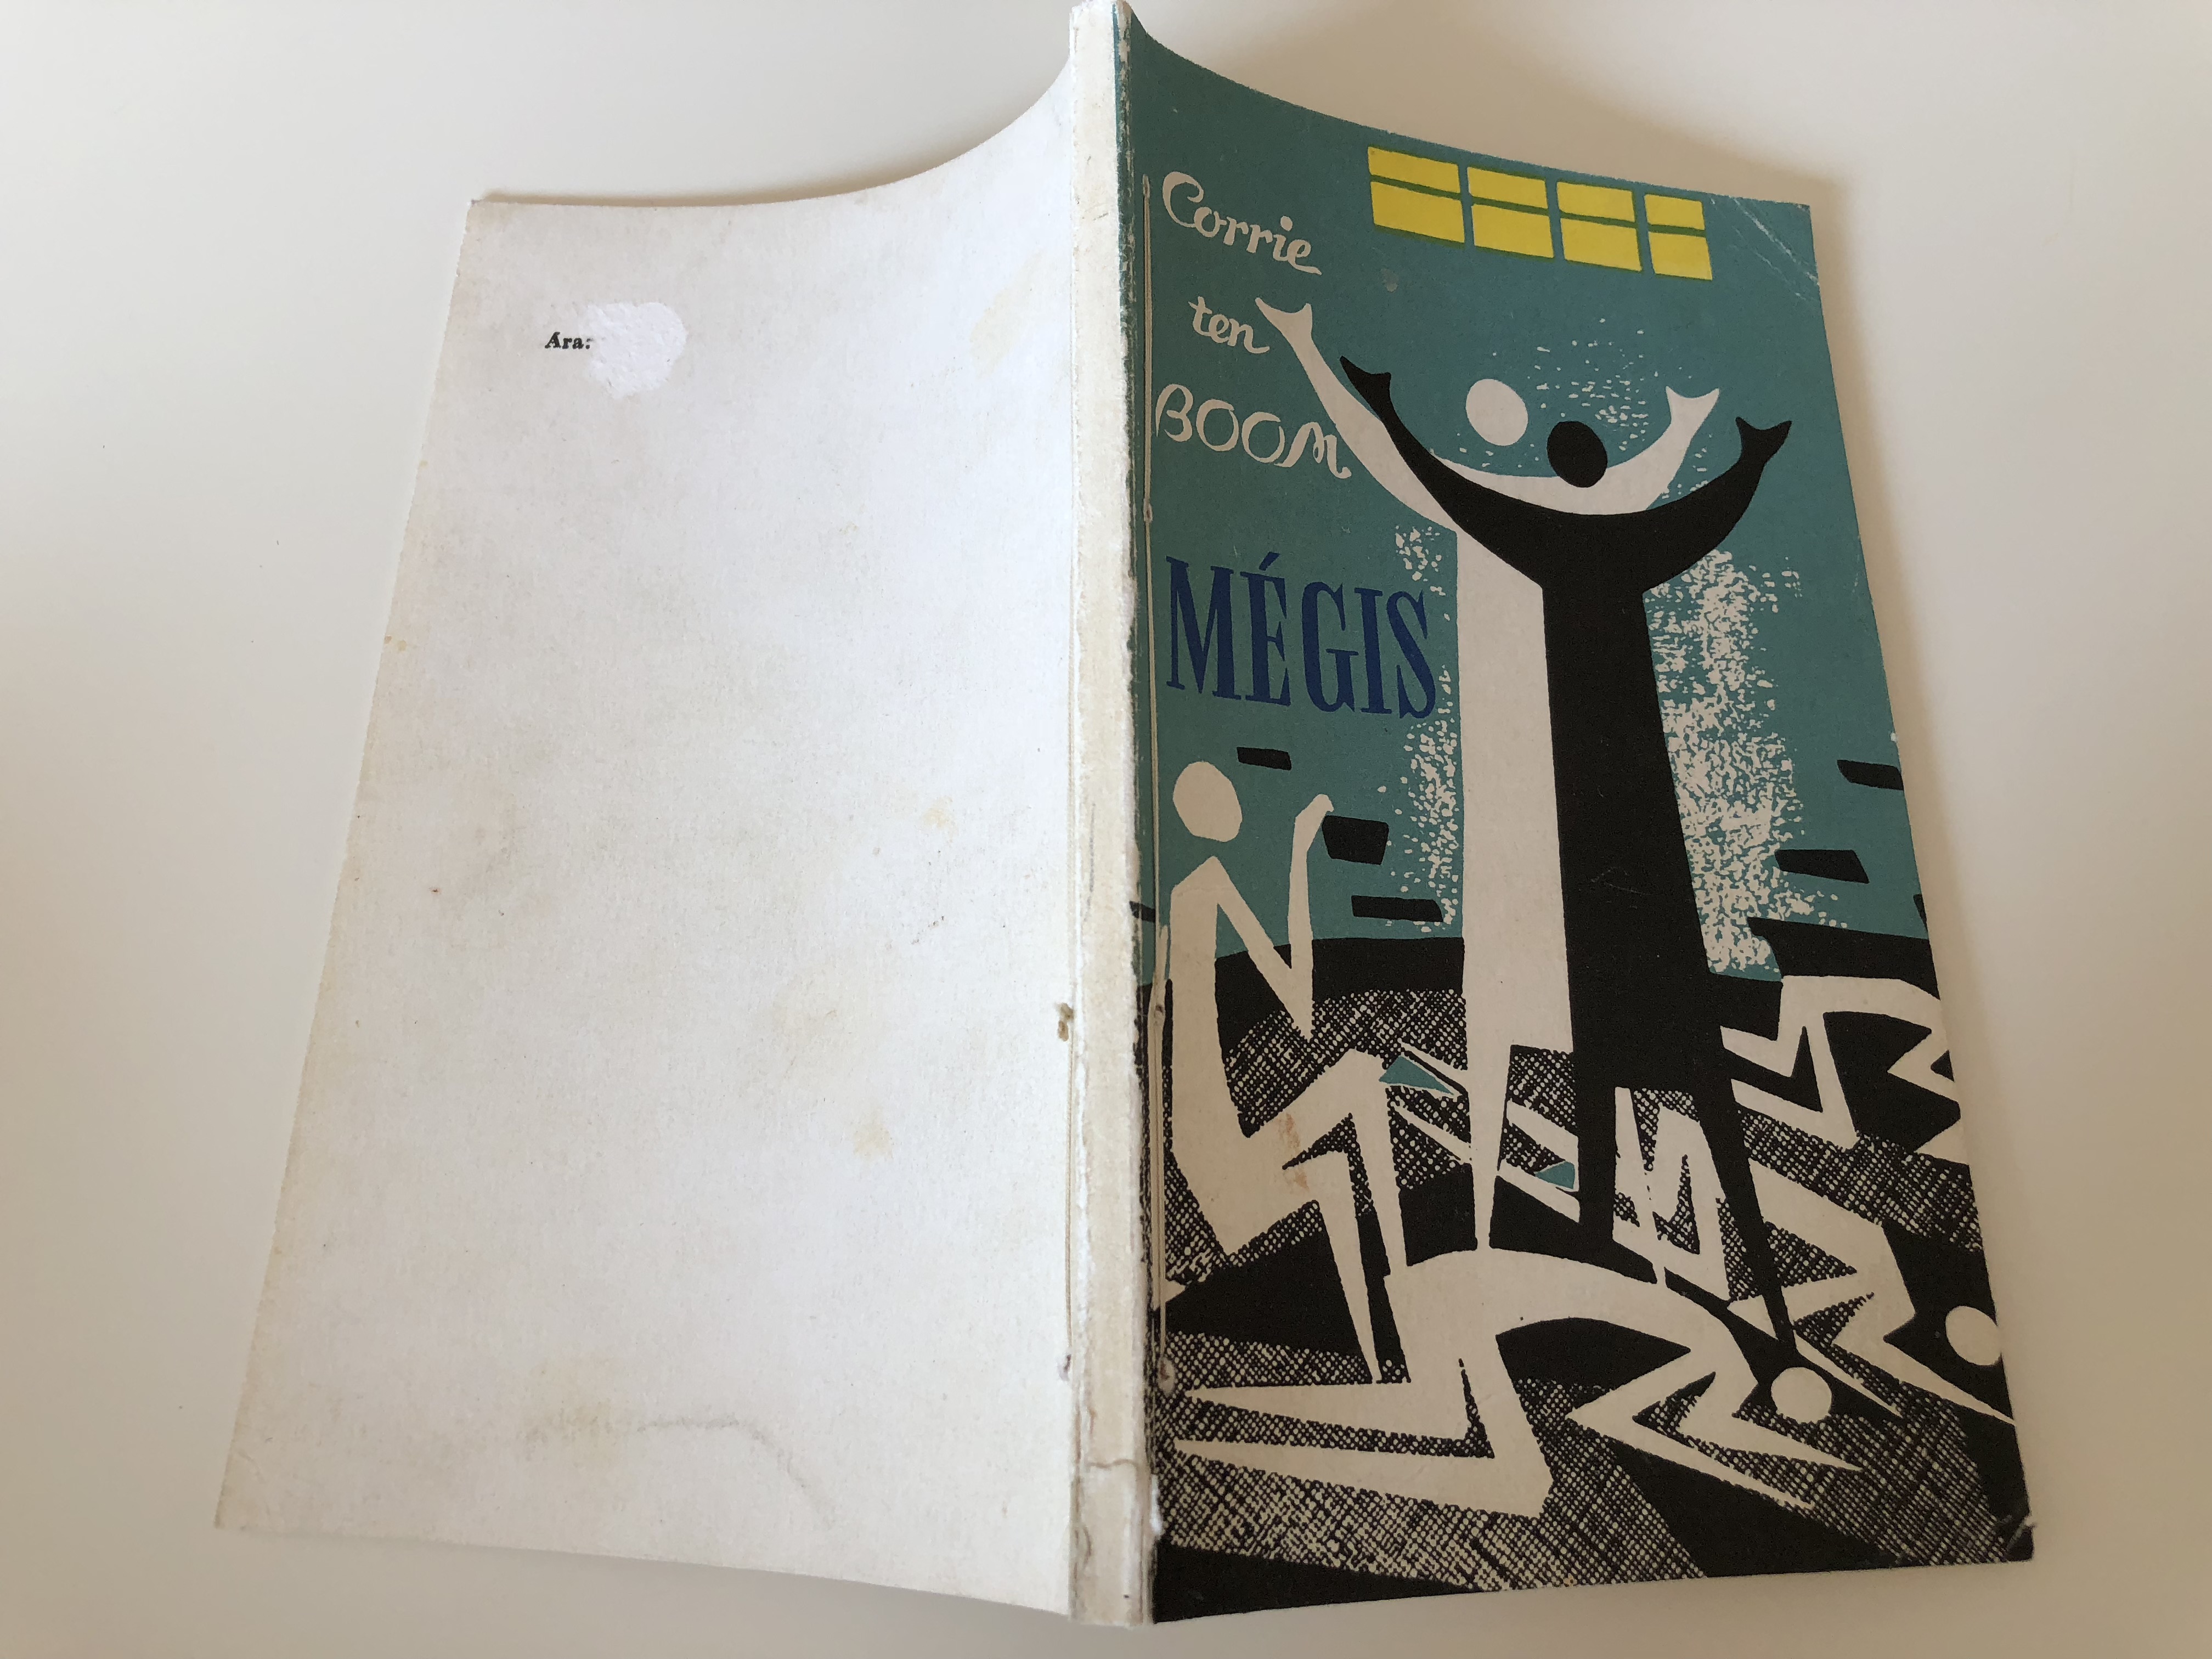 m-gis-corrie-ten-boom-hungarian-translation-of-a-prisoner-and-yet...-paperback-1967-magyarorsz-gi-szabadegyh-zak-tan-csa-10-.jpg